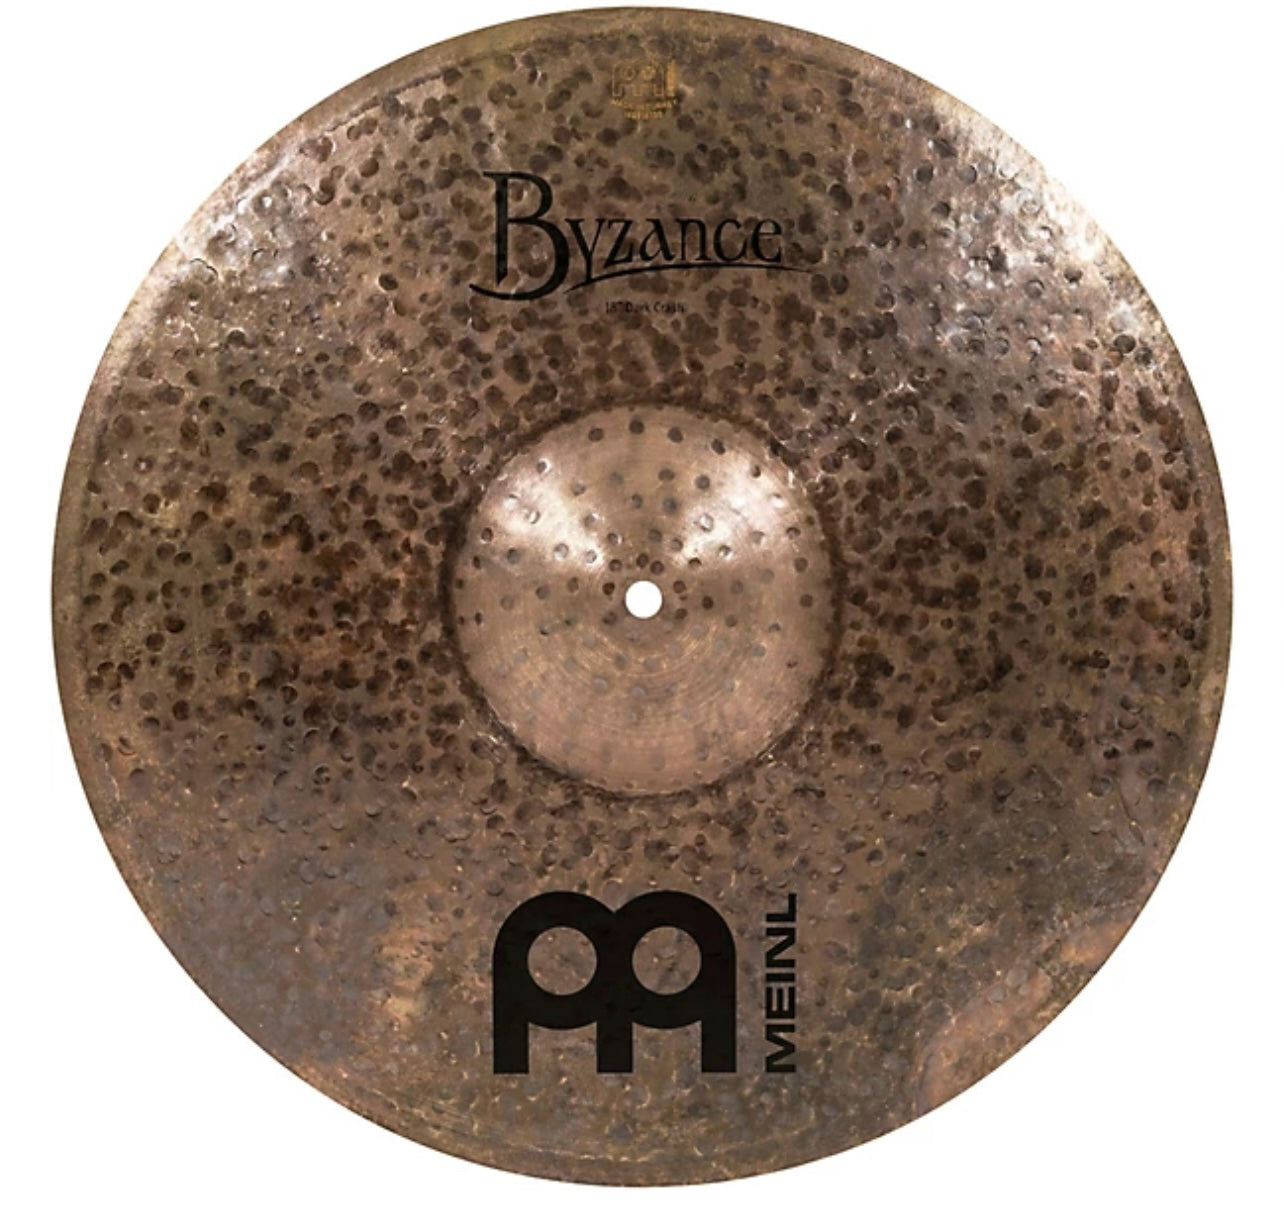 Meinl Byzance Dark 18” Crash Cymbal